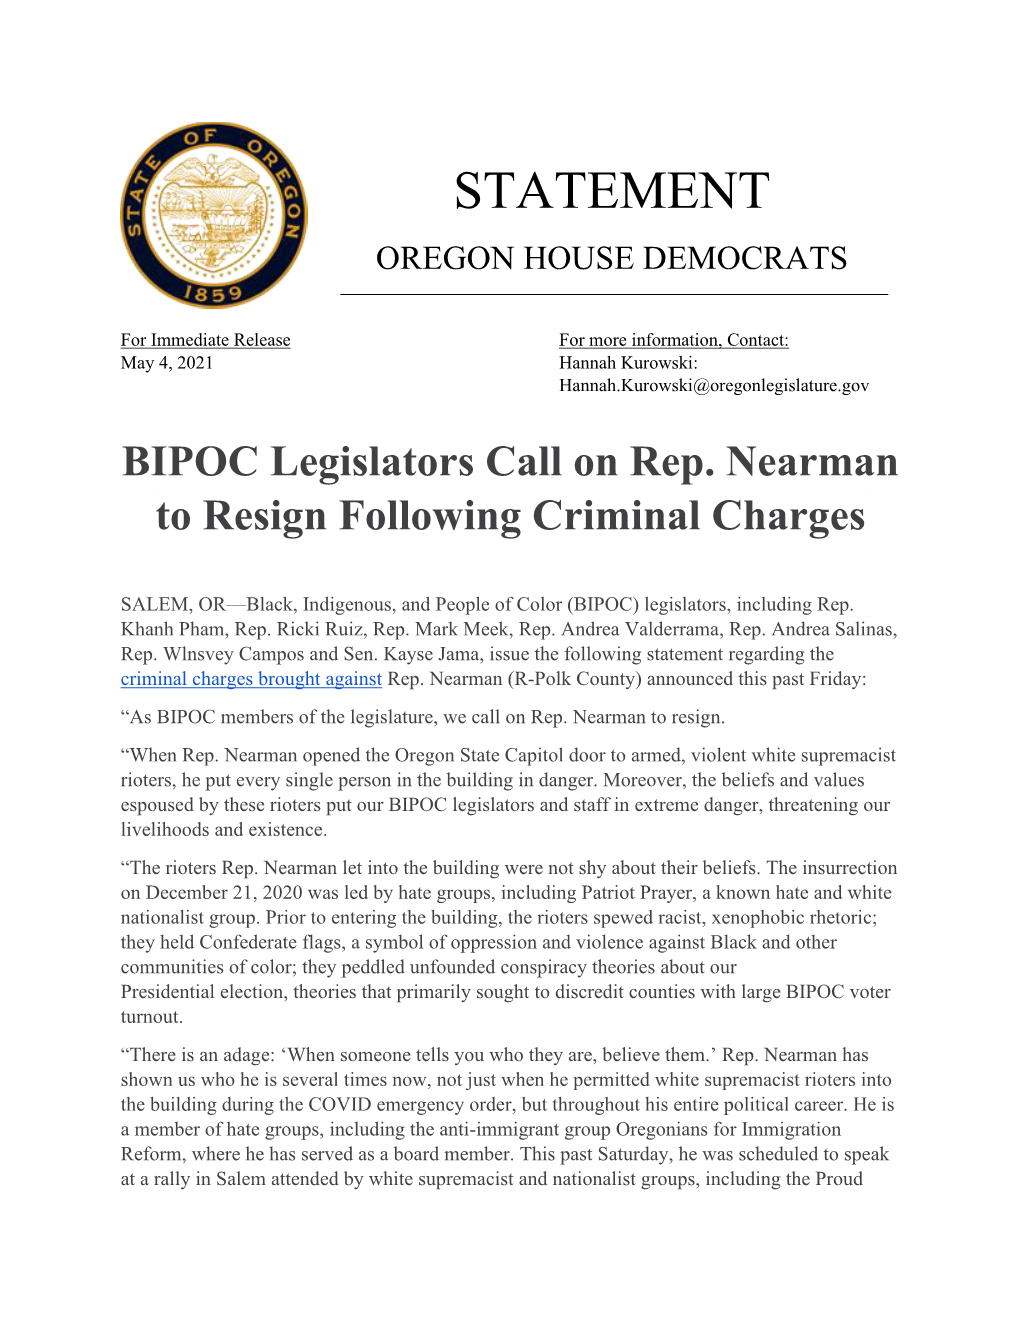 BIPOC Legislators Call on Rep. Nearman to Resign Following Criminal Charges